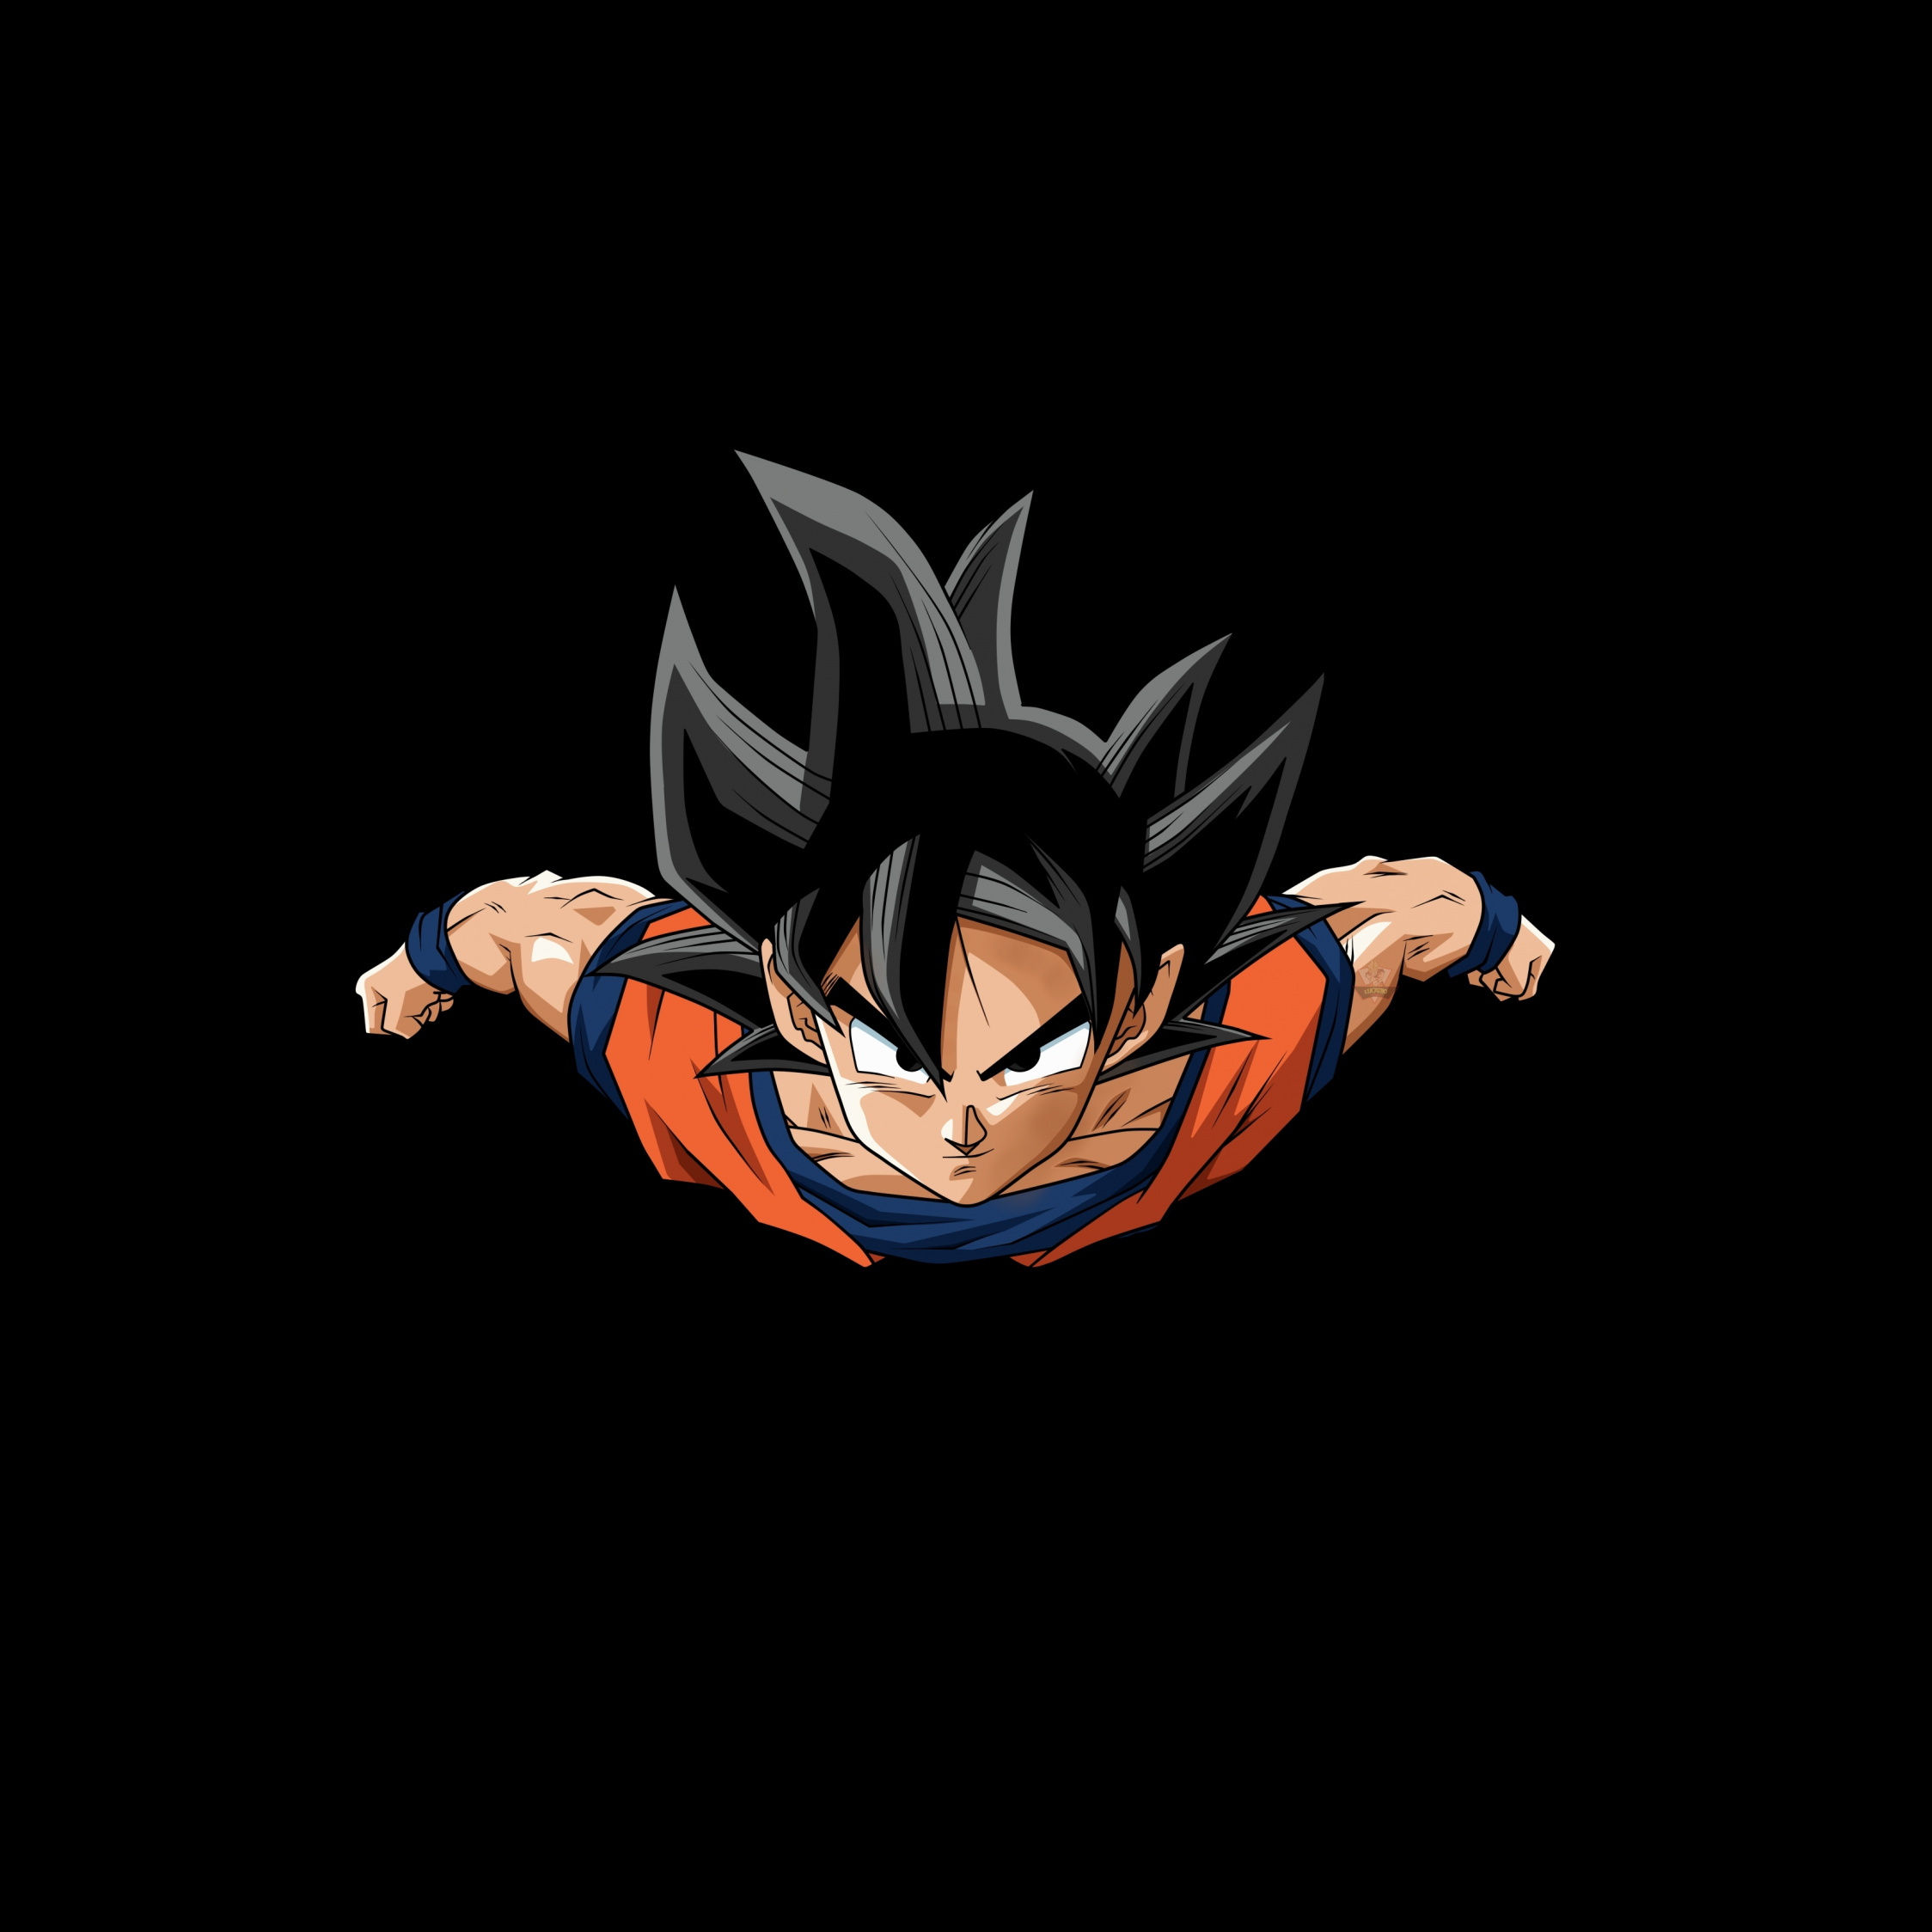 Goku Anime Boy Jump Artwork Wallpaper iPad